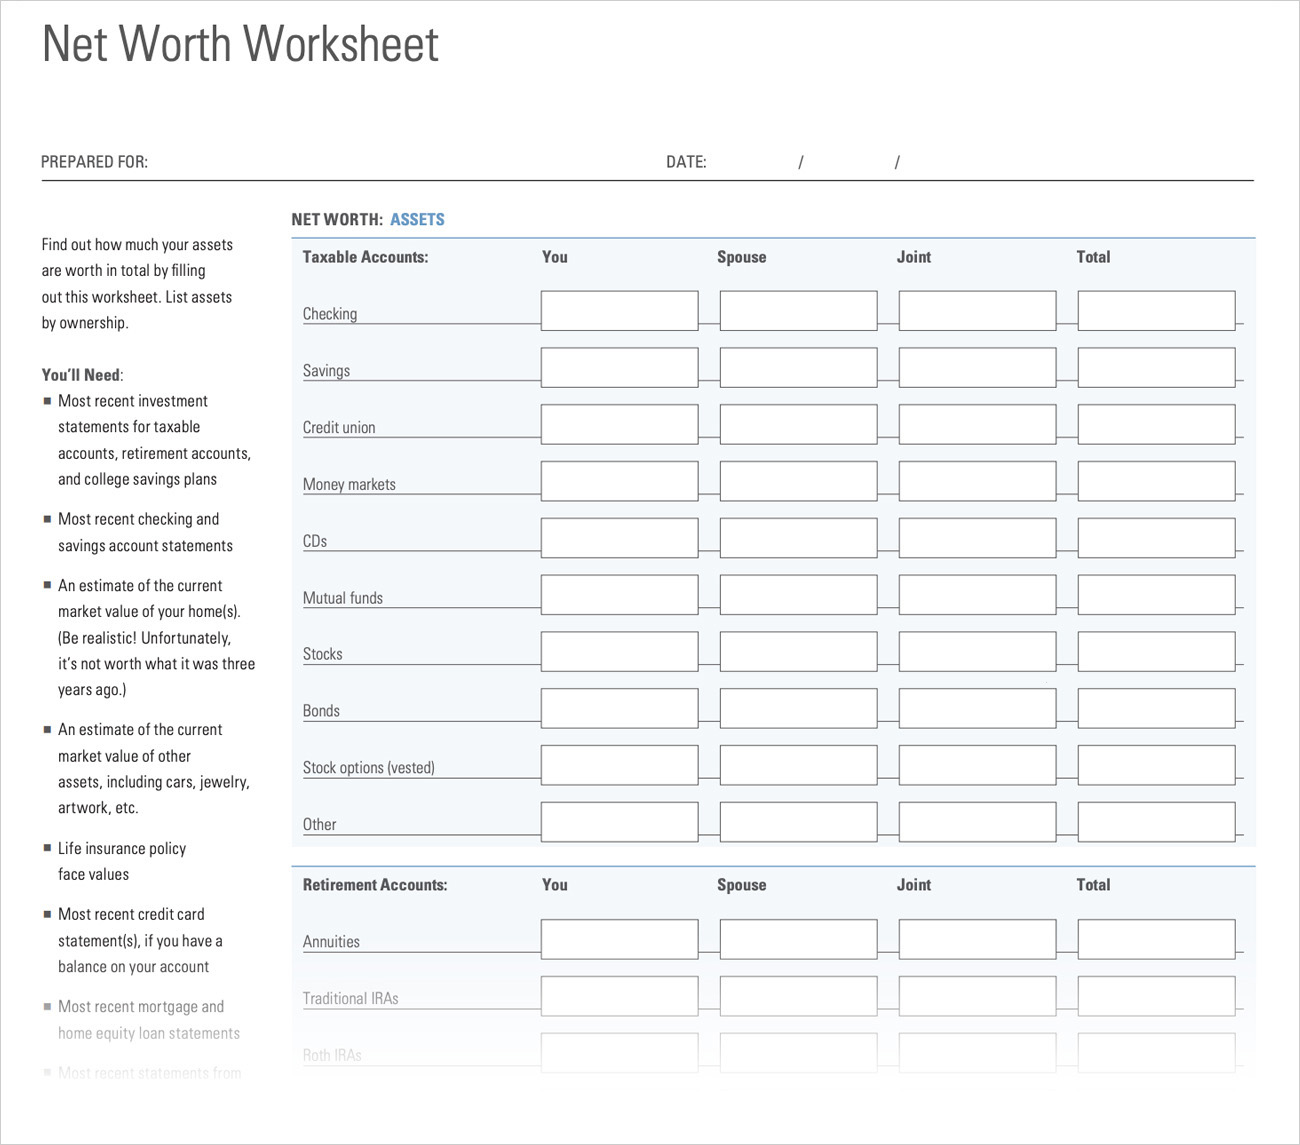 Net Worth Worksheet  Morningstar Inside Personal Net Worth Worksheet